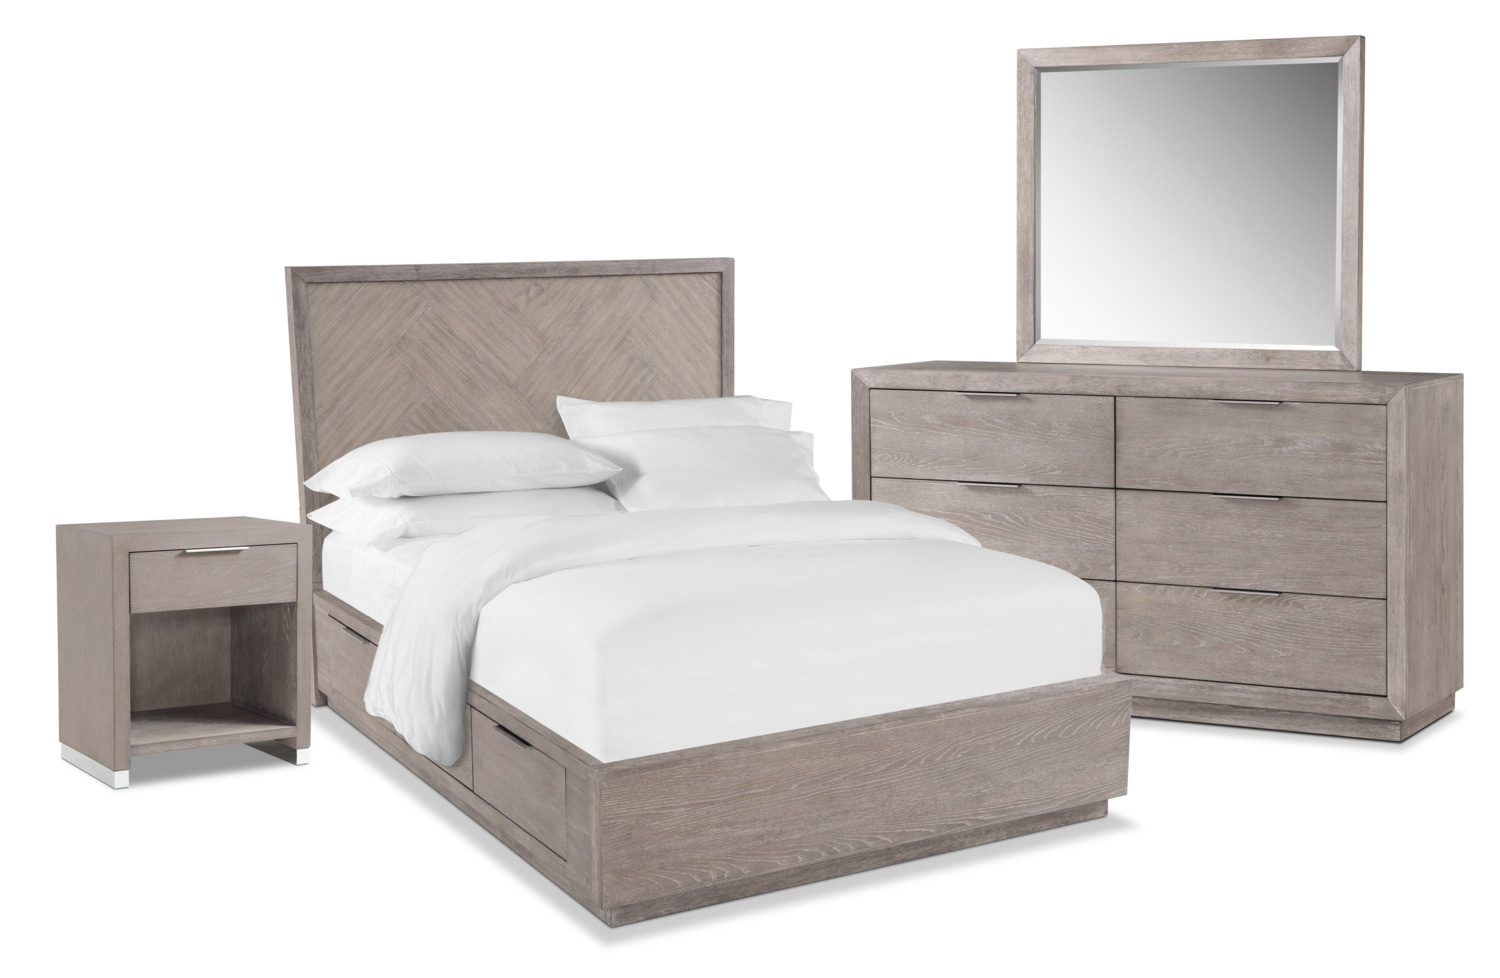 Zen 6 Piece Storage Bedroom Set With Nightstand Dresser And Mirror throughout dimensions 1500 X 978